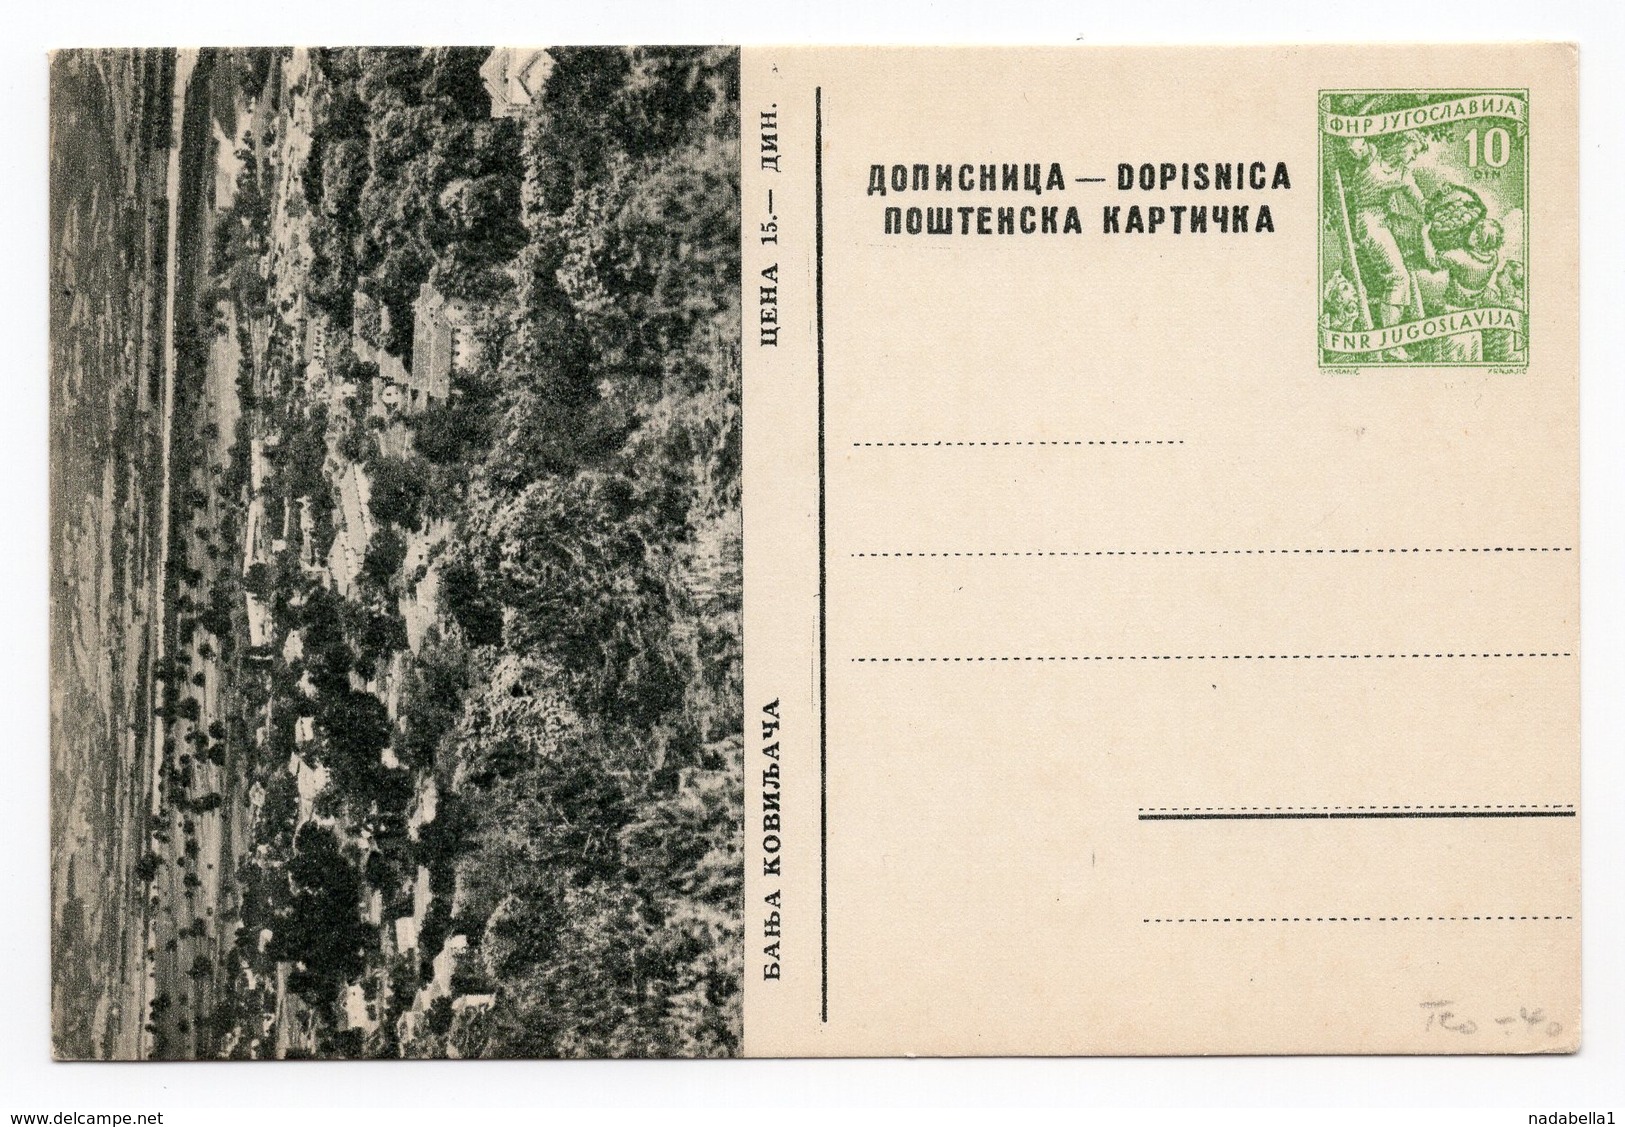 1956, YUGOSLAVIA, BANJA KOVILJACA, SERBIA,10 DINARA GREEN, ILLUSTRATED STATIONERY CARD, MINT - Postal Stationery